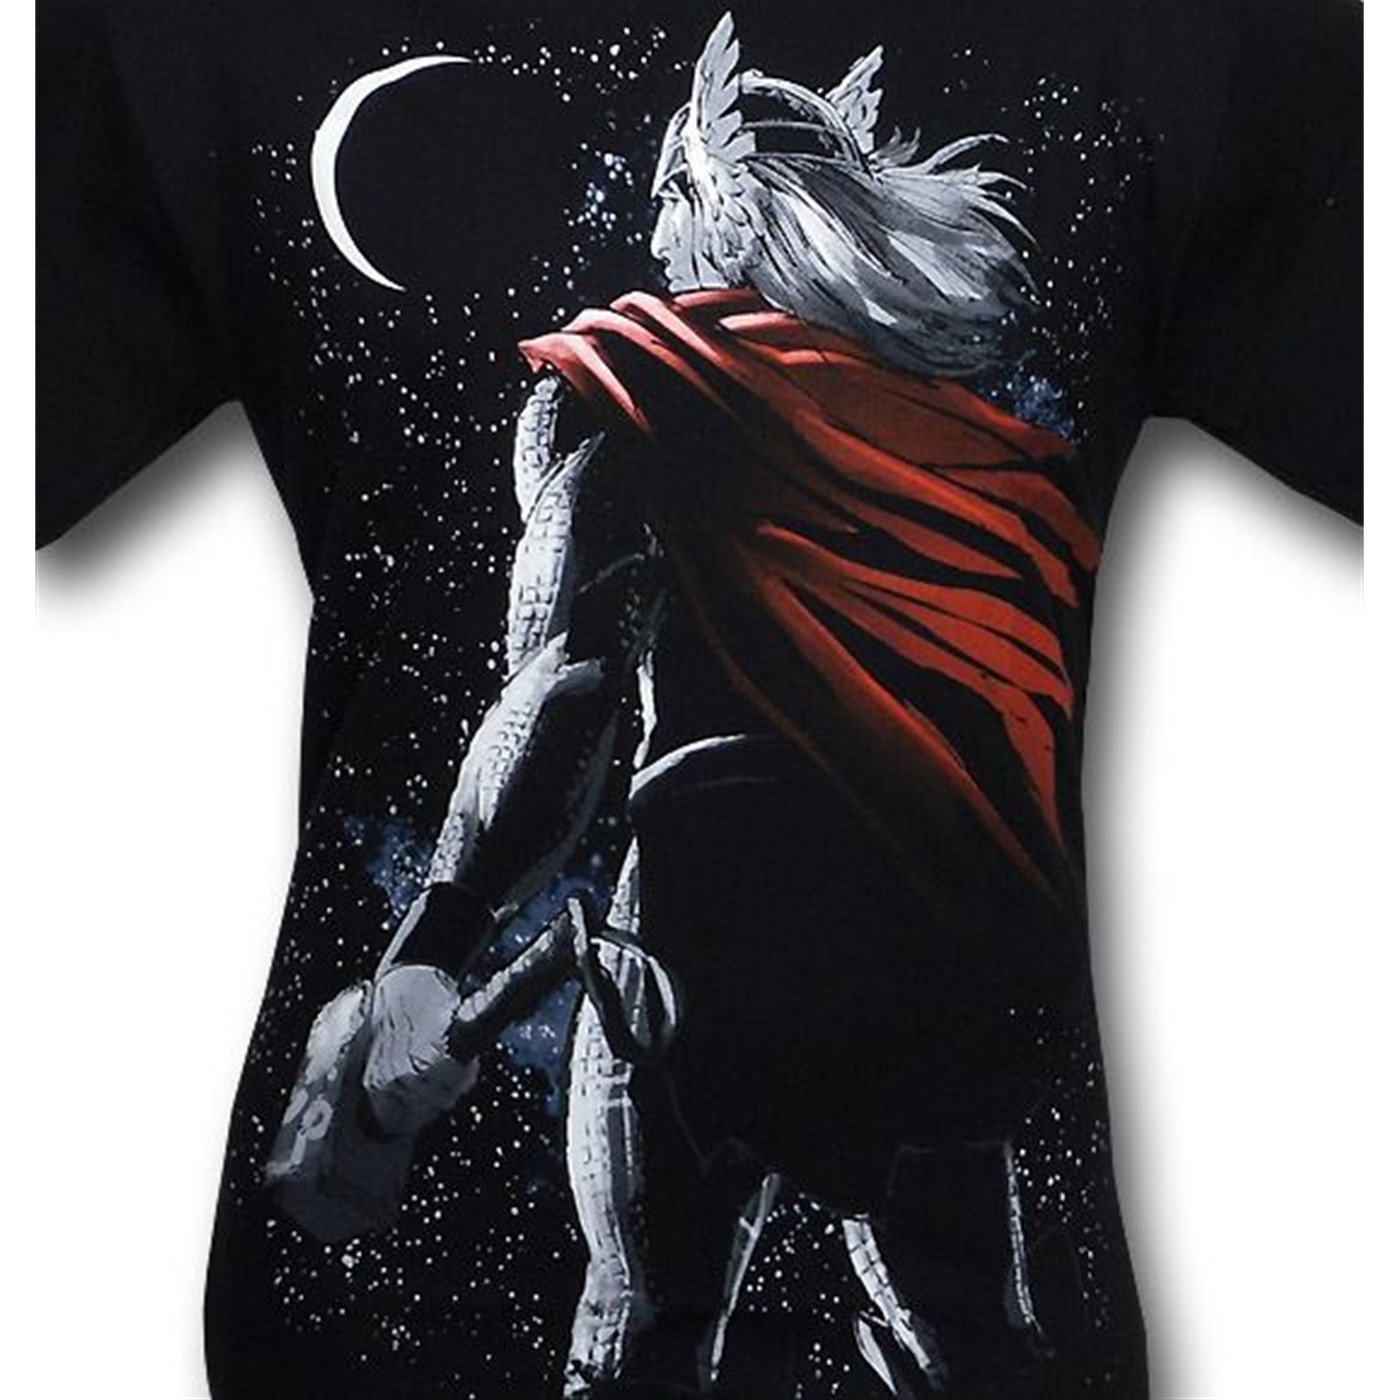 Thor Star Rider T-Shirt